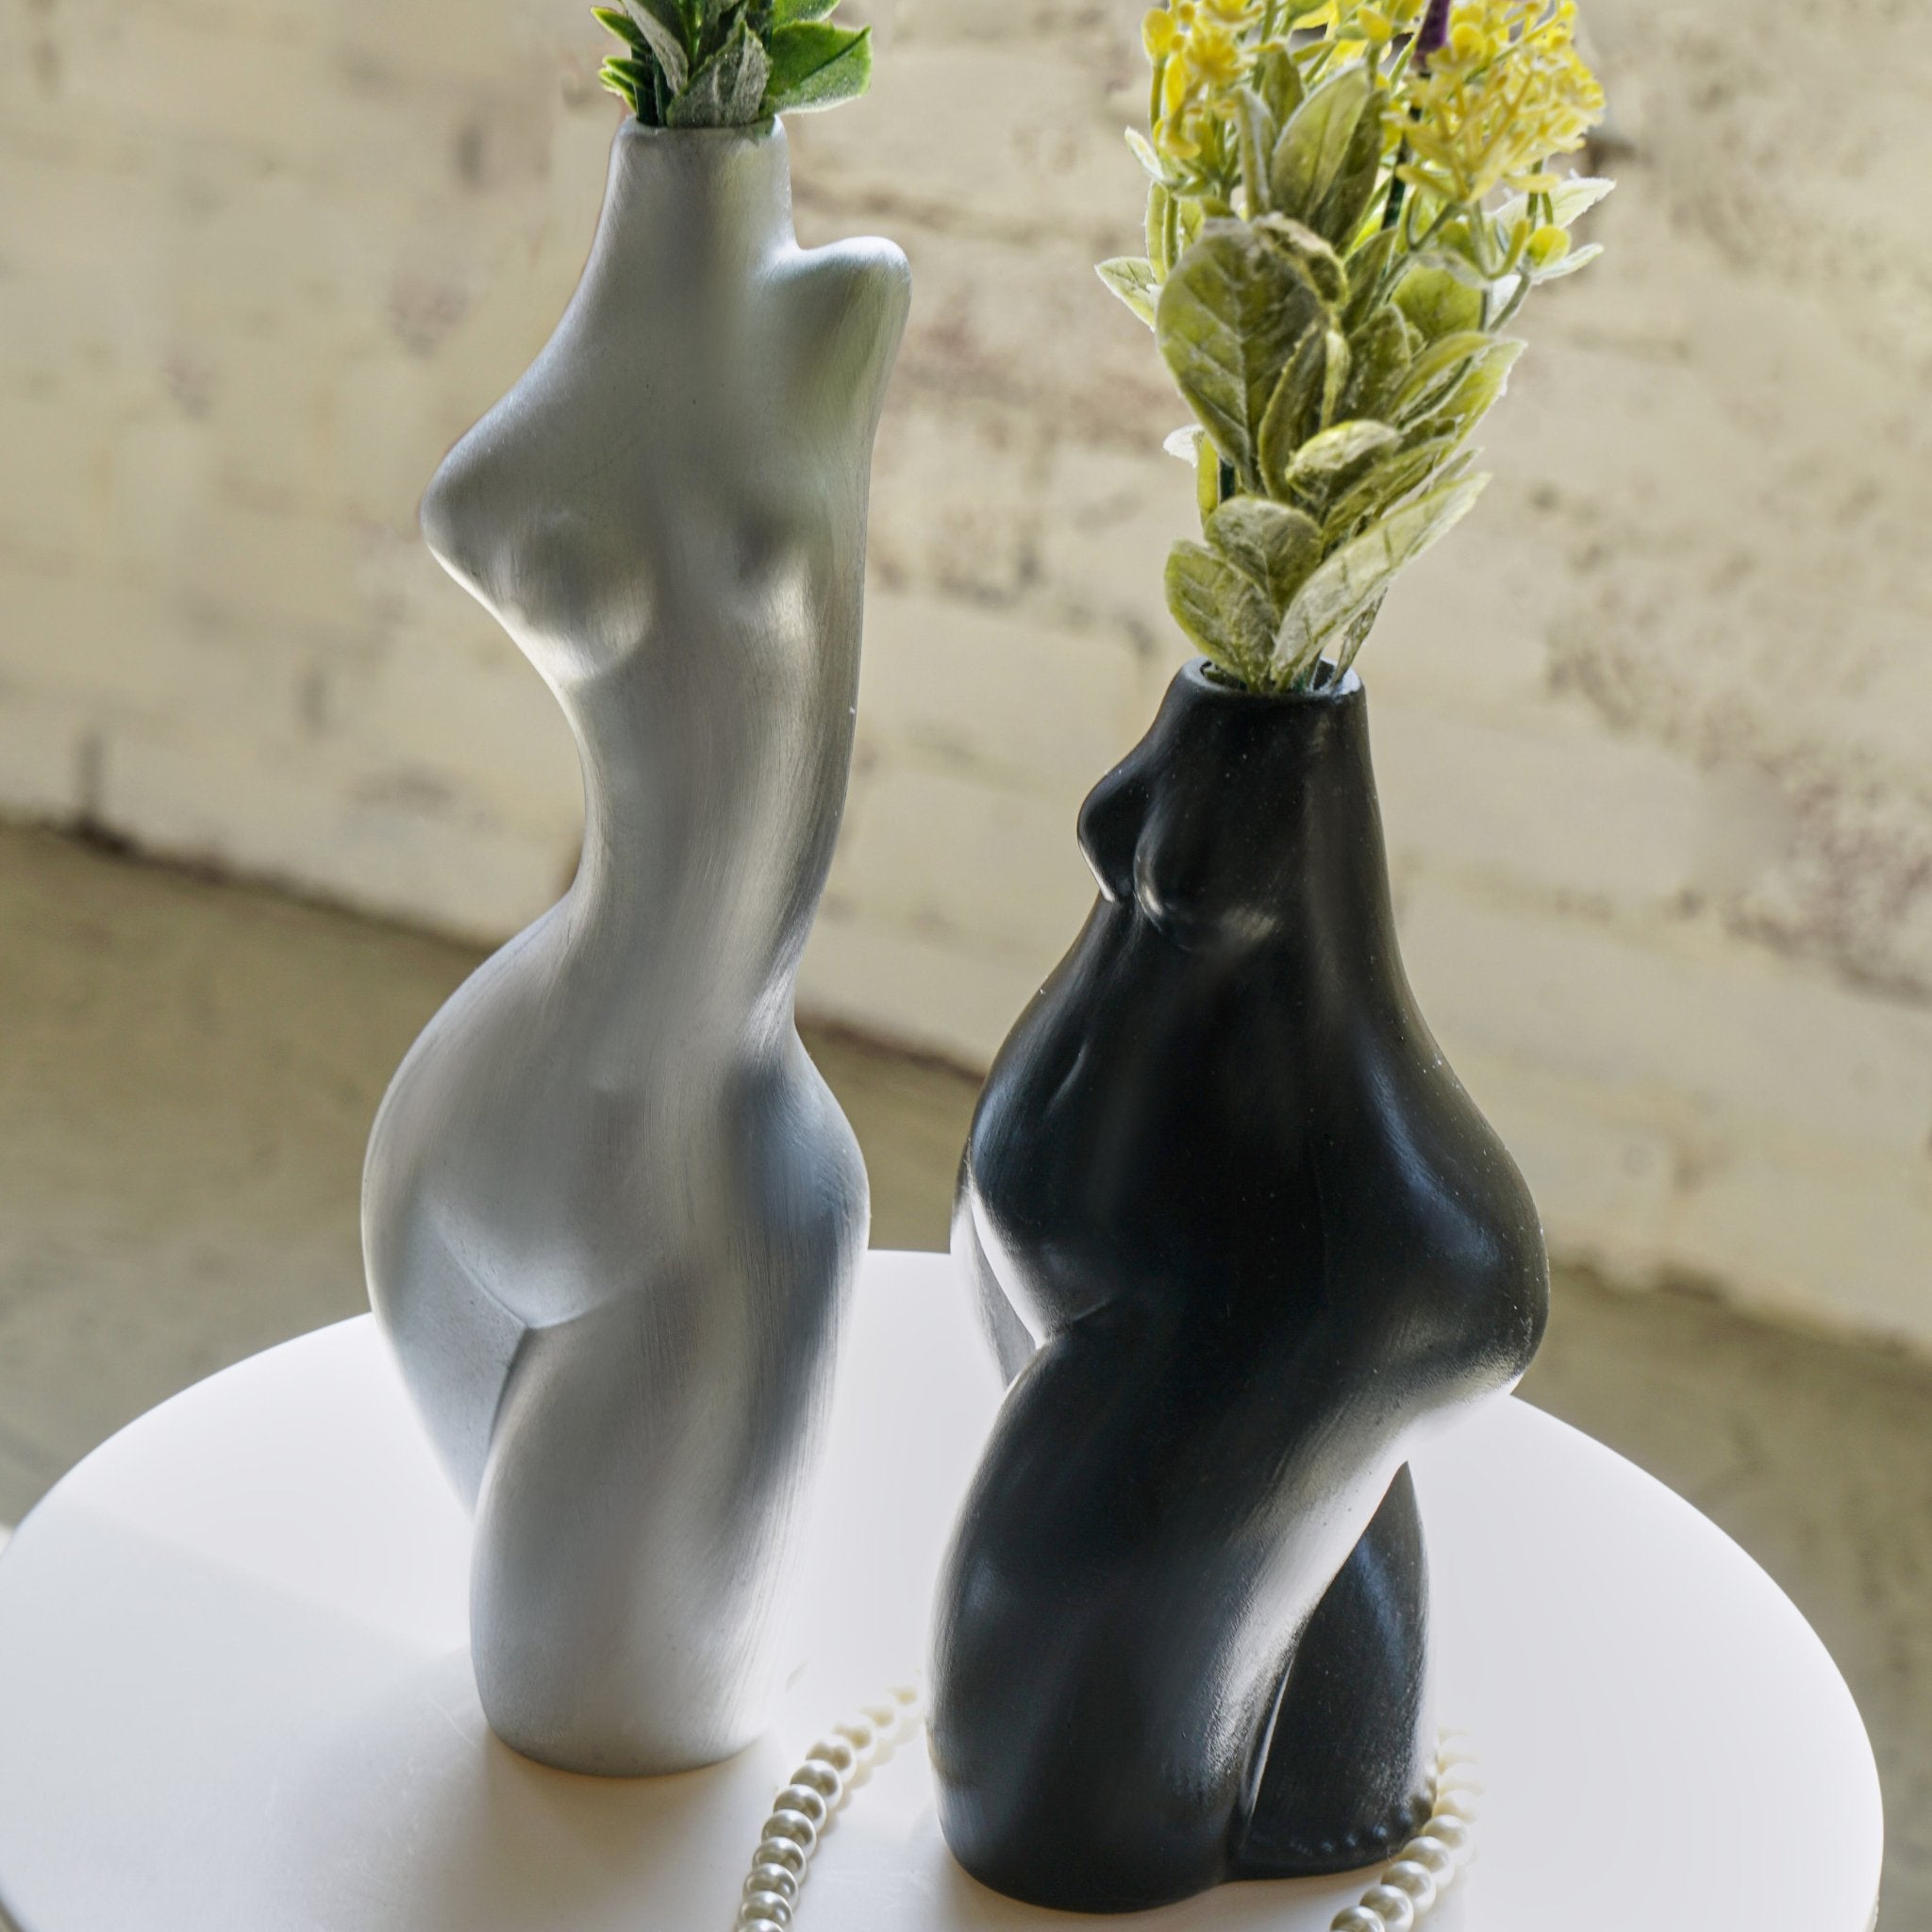 ZORA's 'Embrace Your Shape' vase set - Celebrating diverse female forms in decor